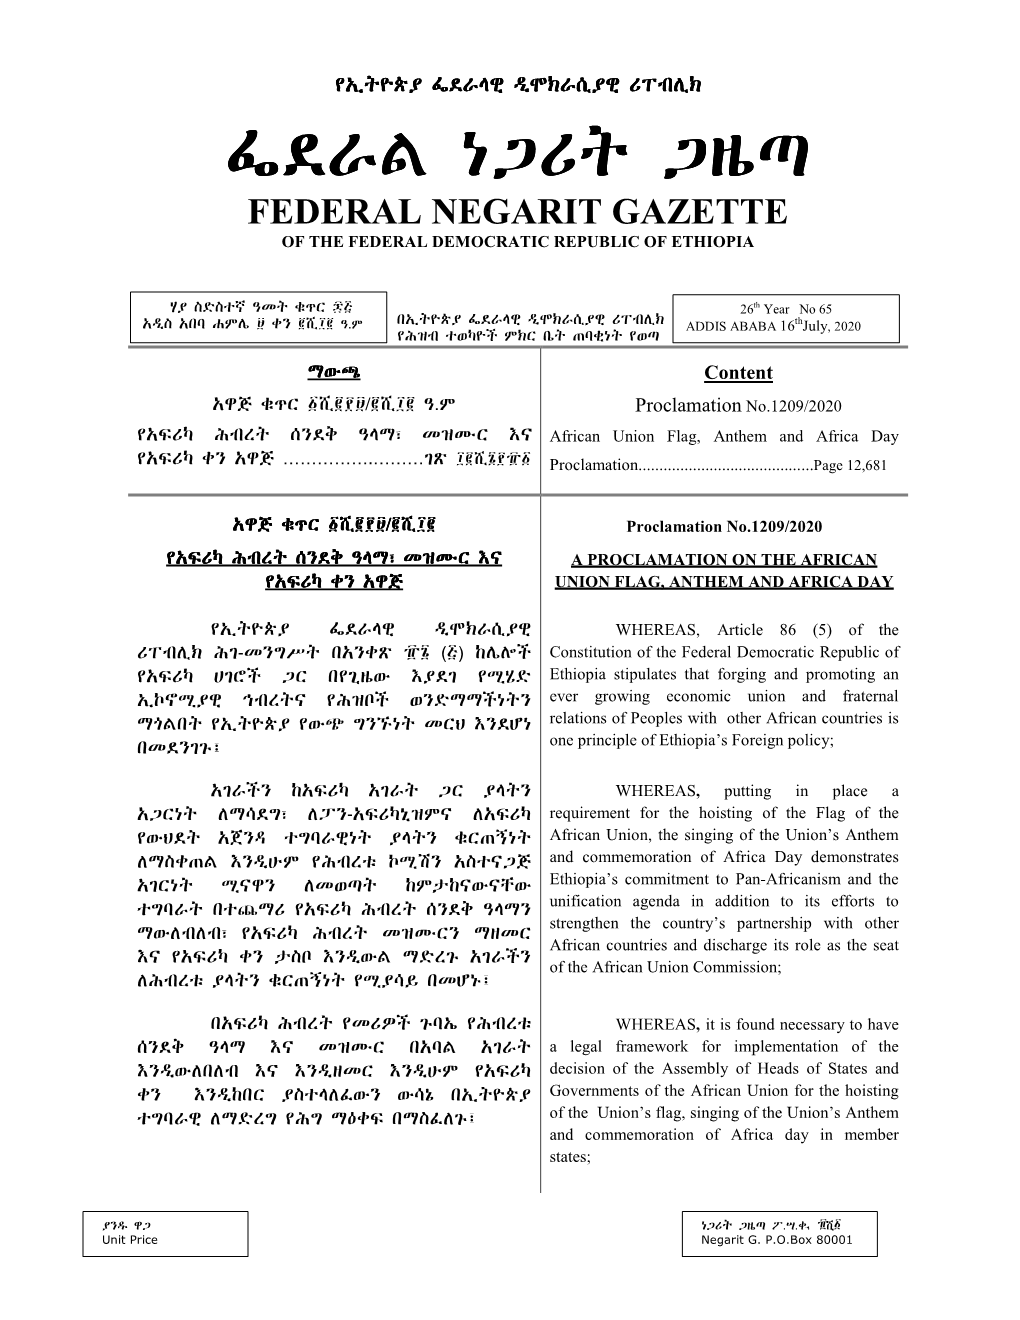 Federal Negarit Gazette of the Federal Democratic Republic of Ethiopia